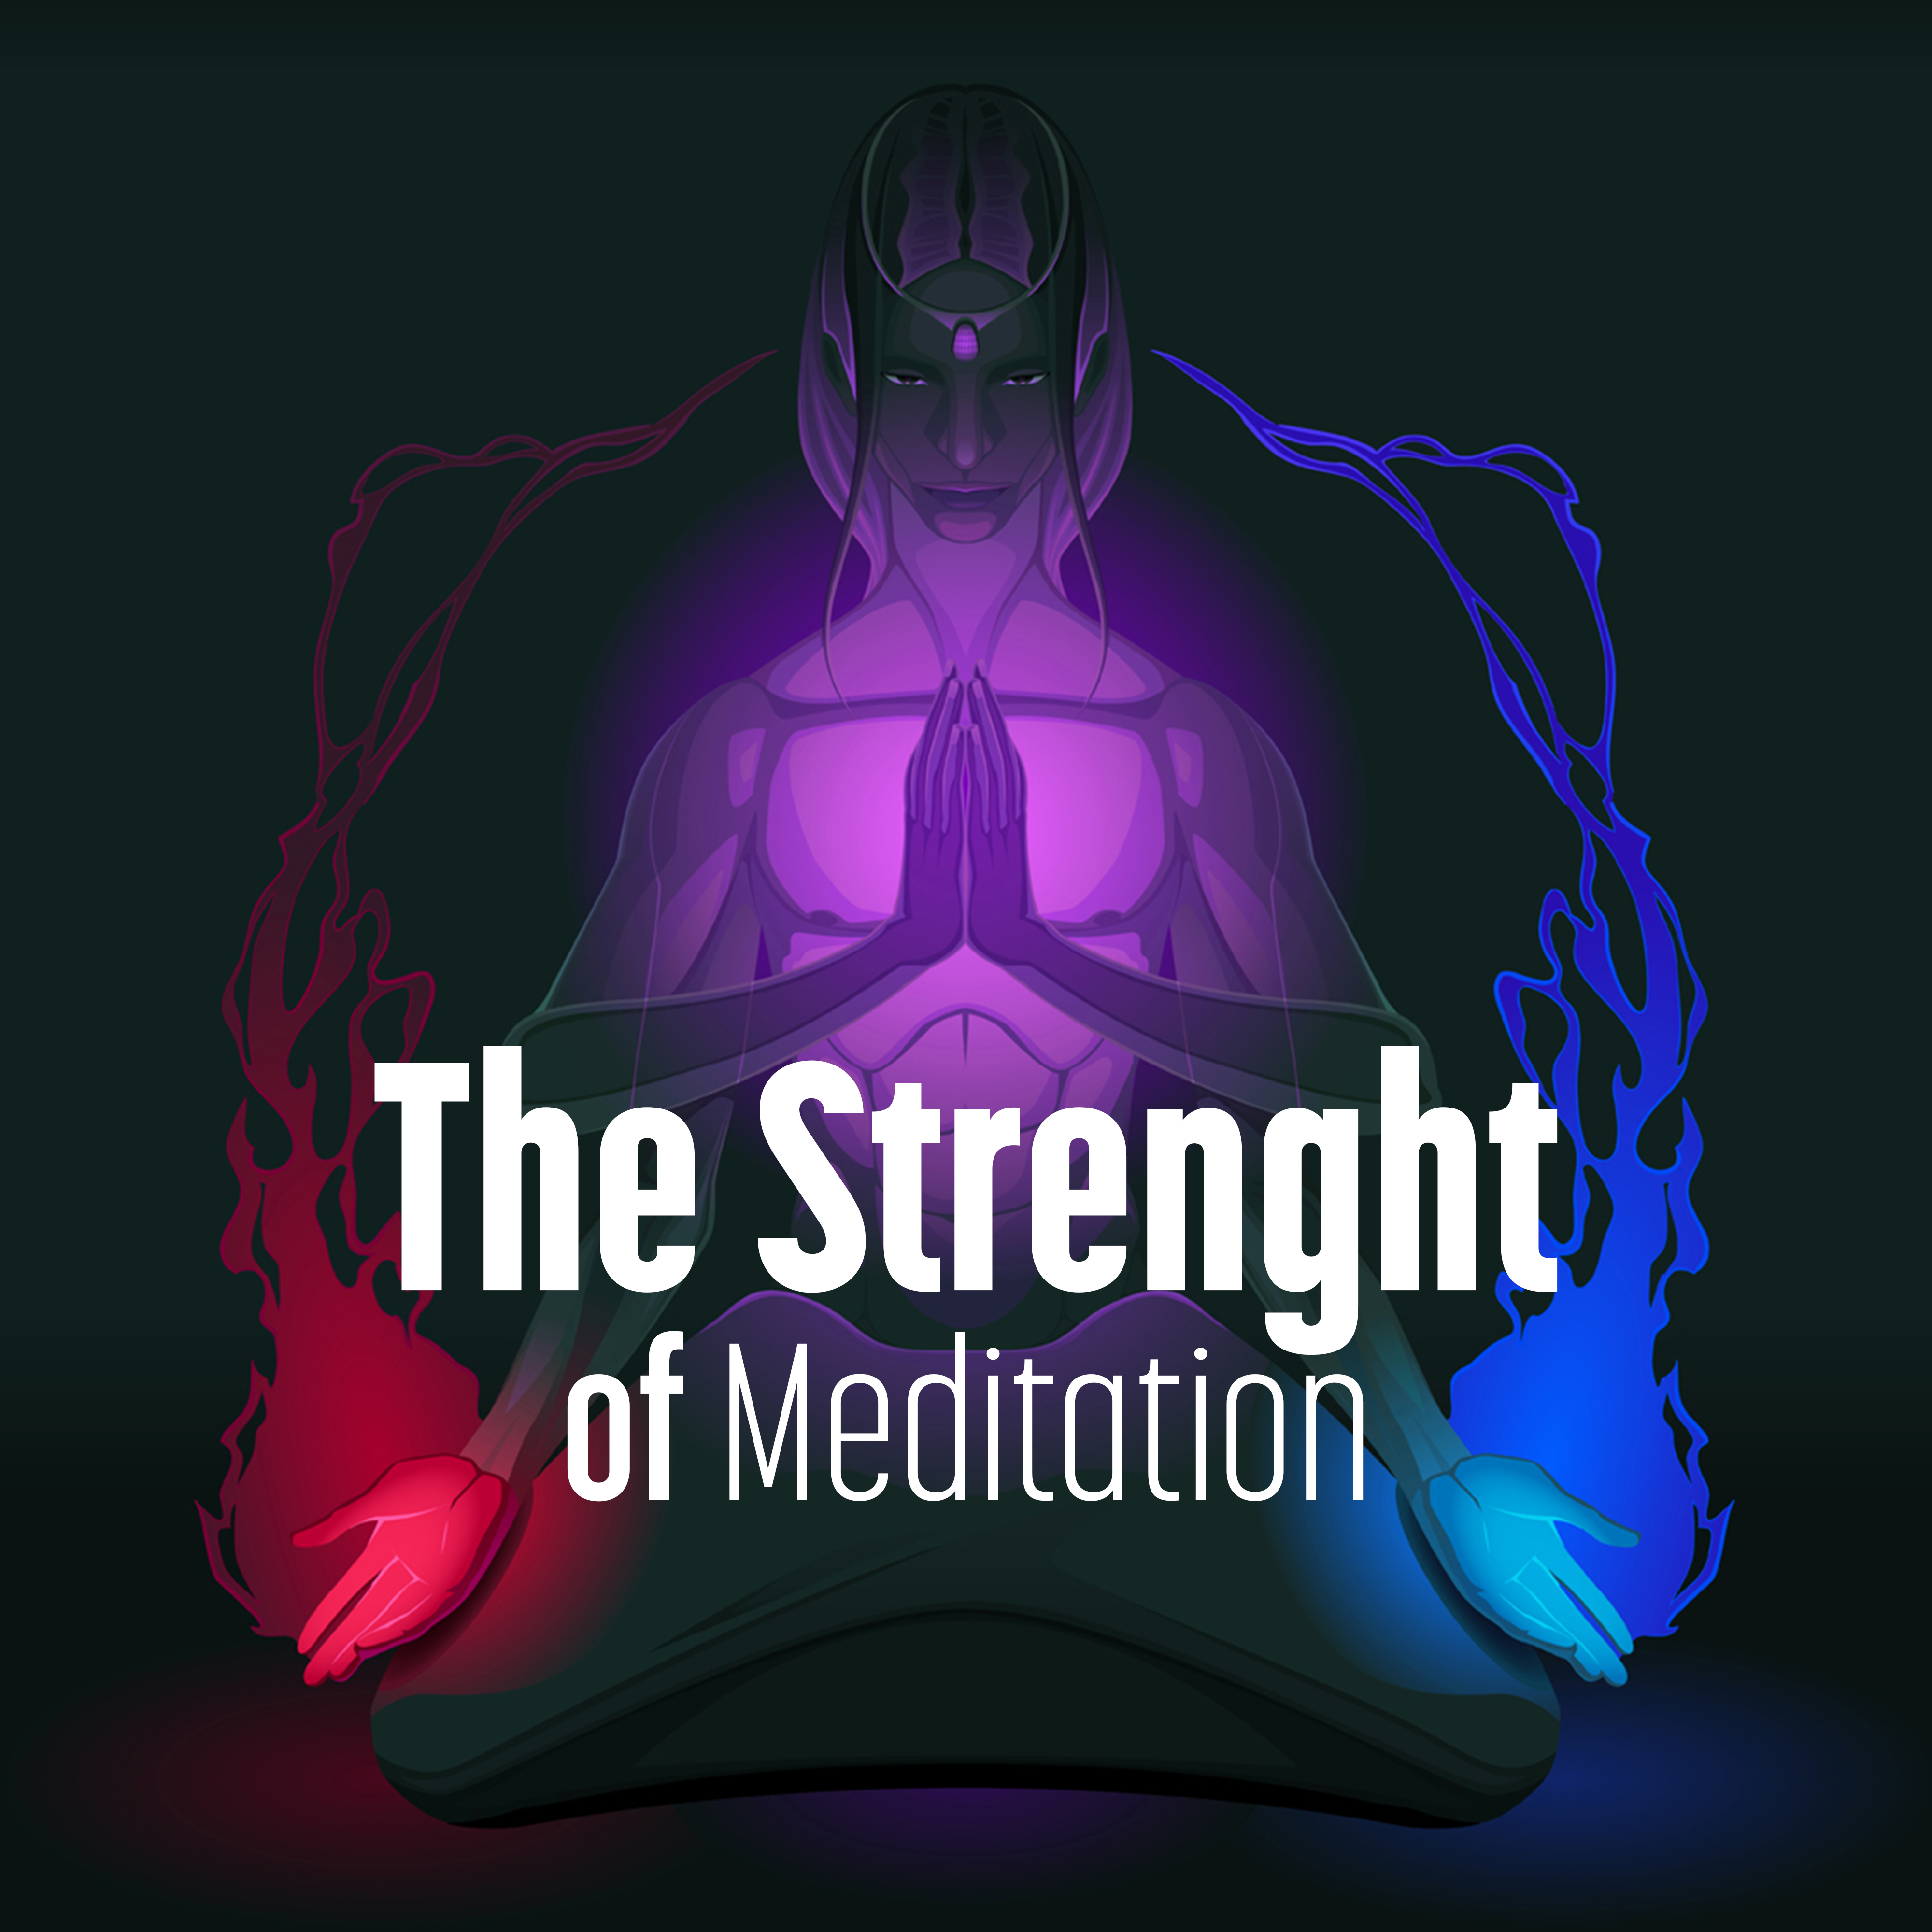 The Strength of Meditation